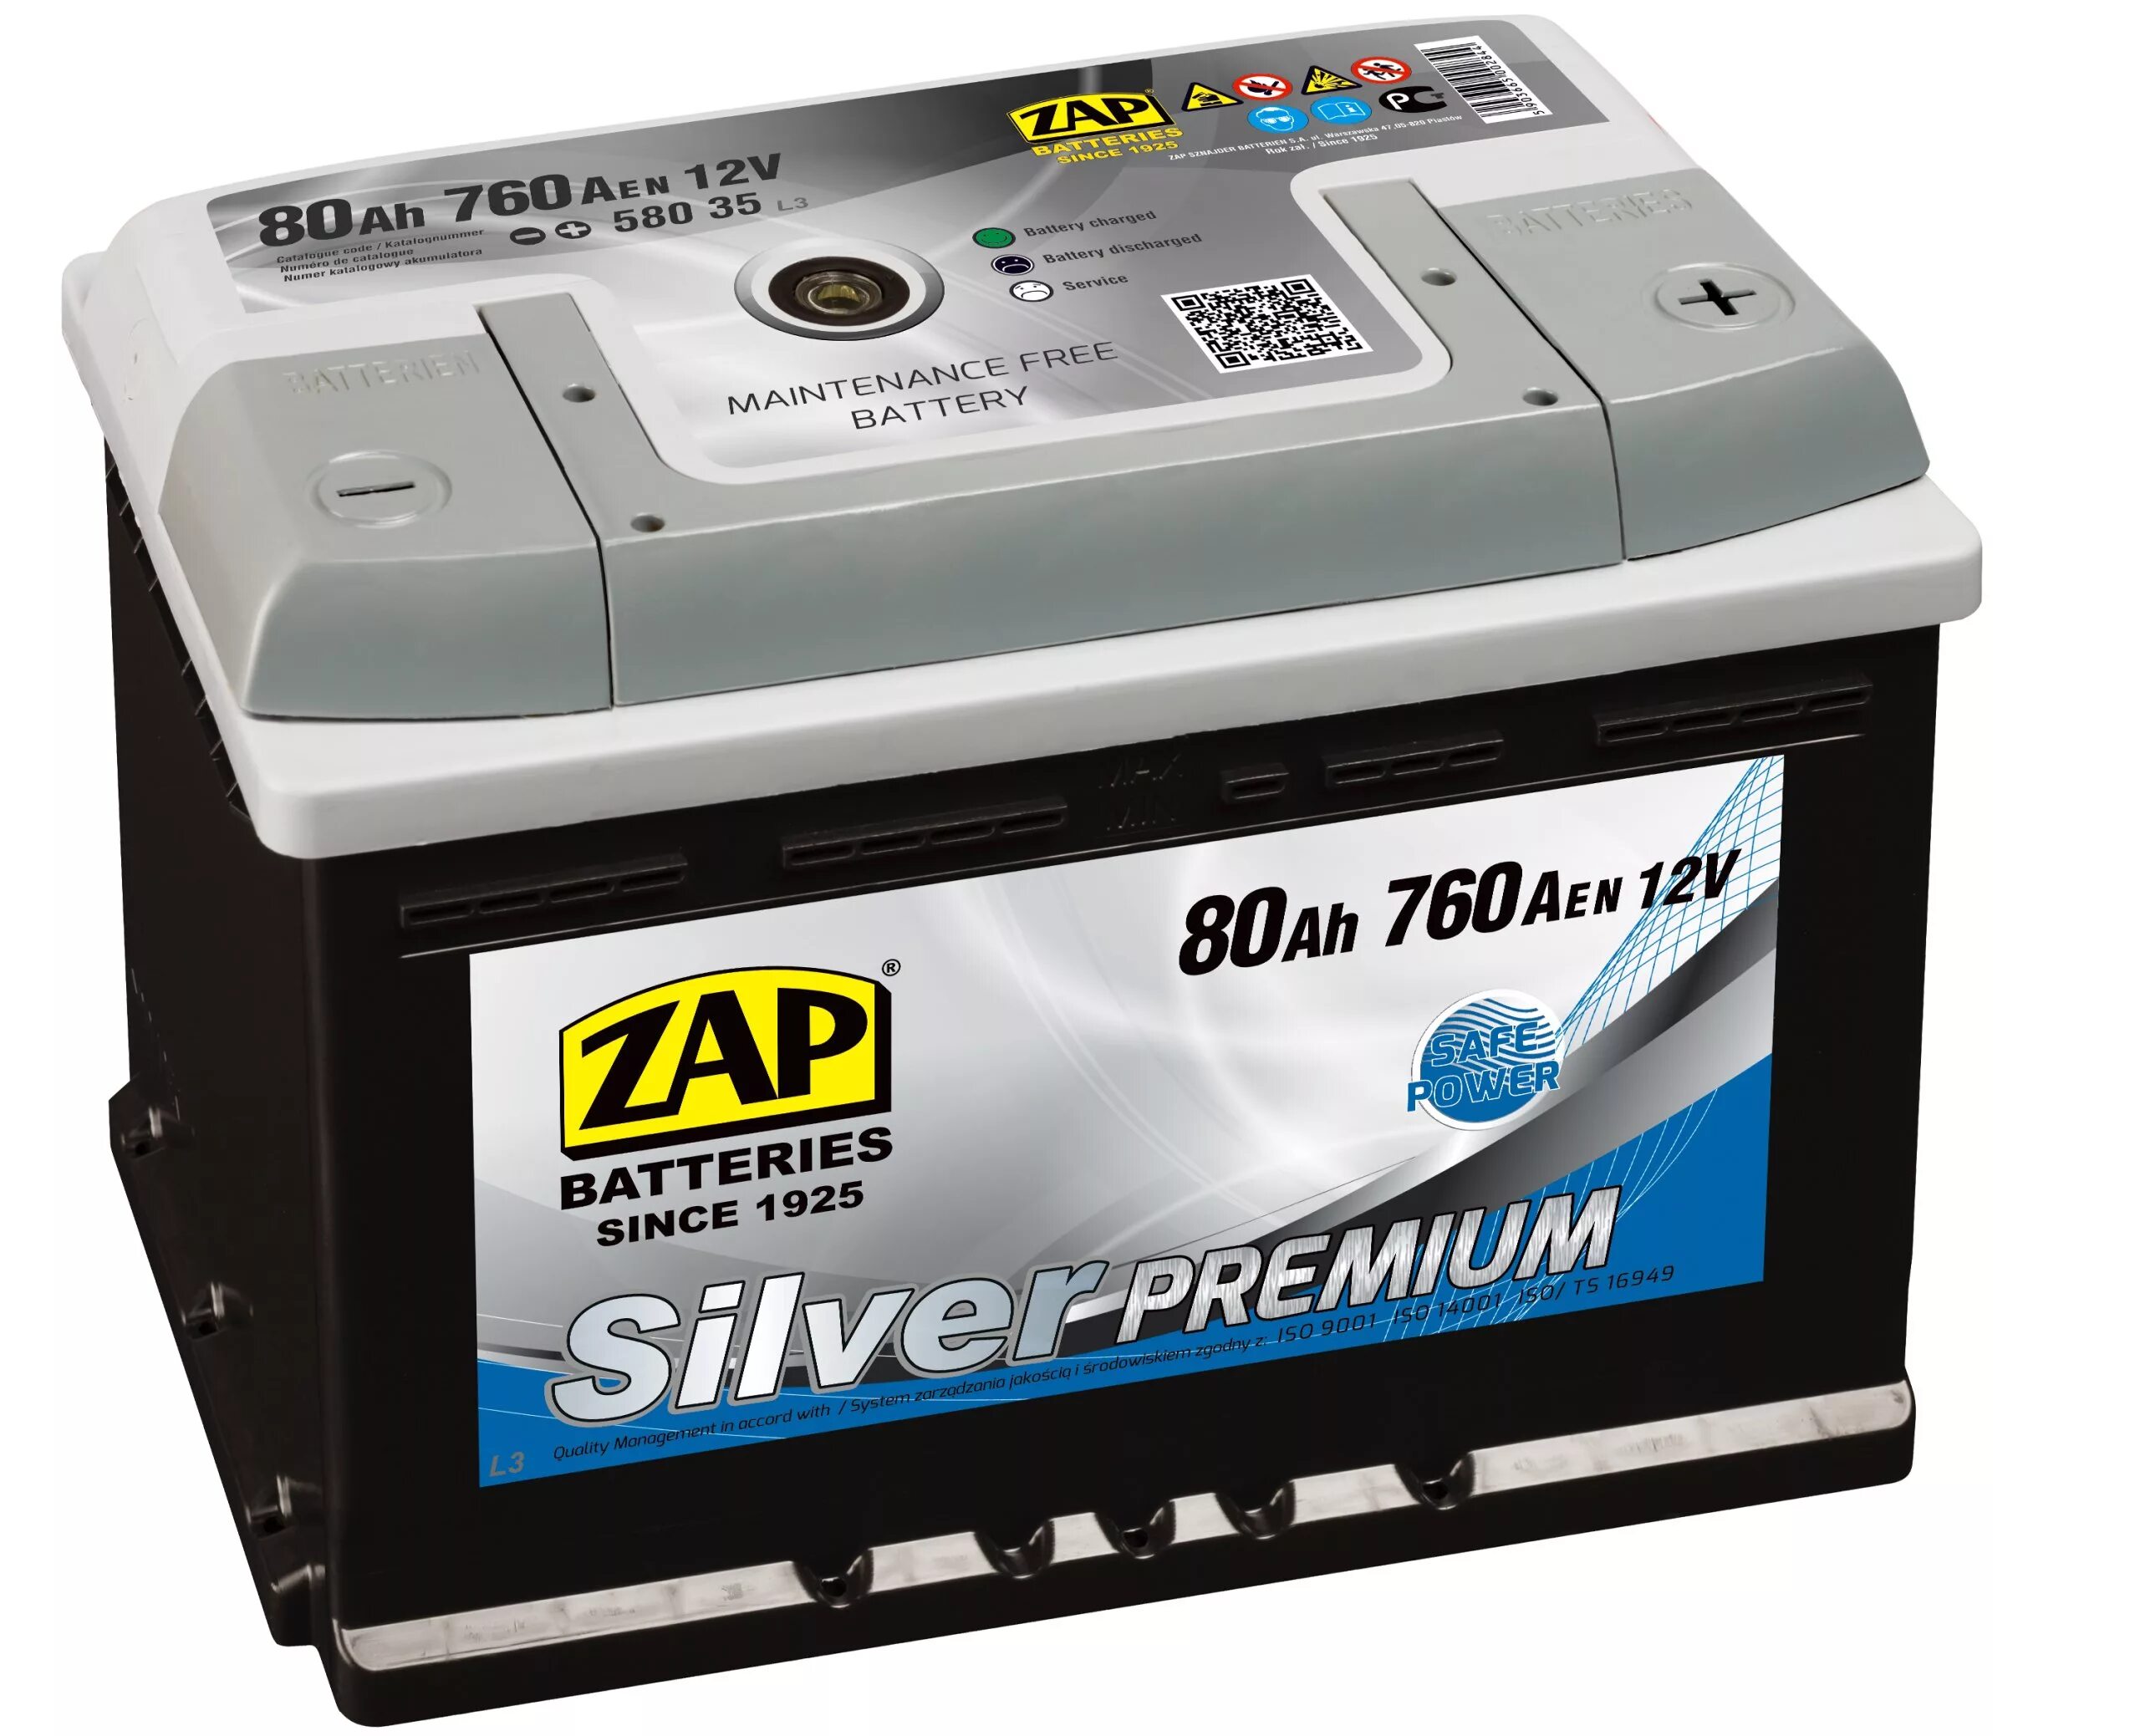 Куплю аккумулятор для автомобиля в минске. 75 Ah Zap Silver Premium r+. Zap Silver-Premium 75ah 750a. АКБ Сильвер премиум 65. Аккумулятор Zap Silver Premium.